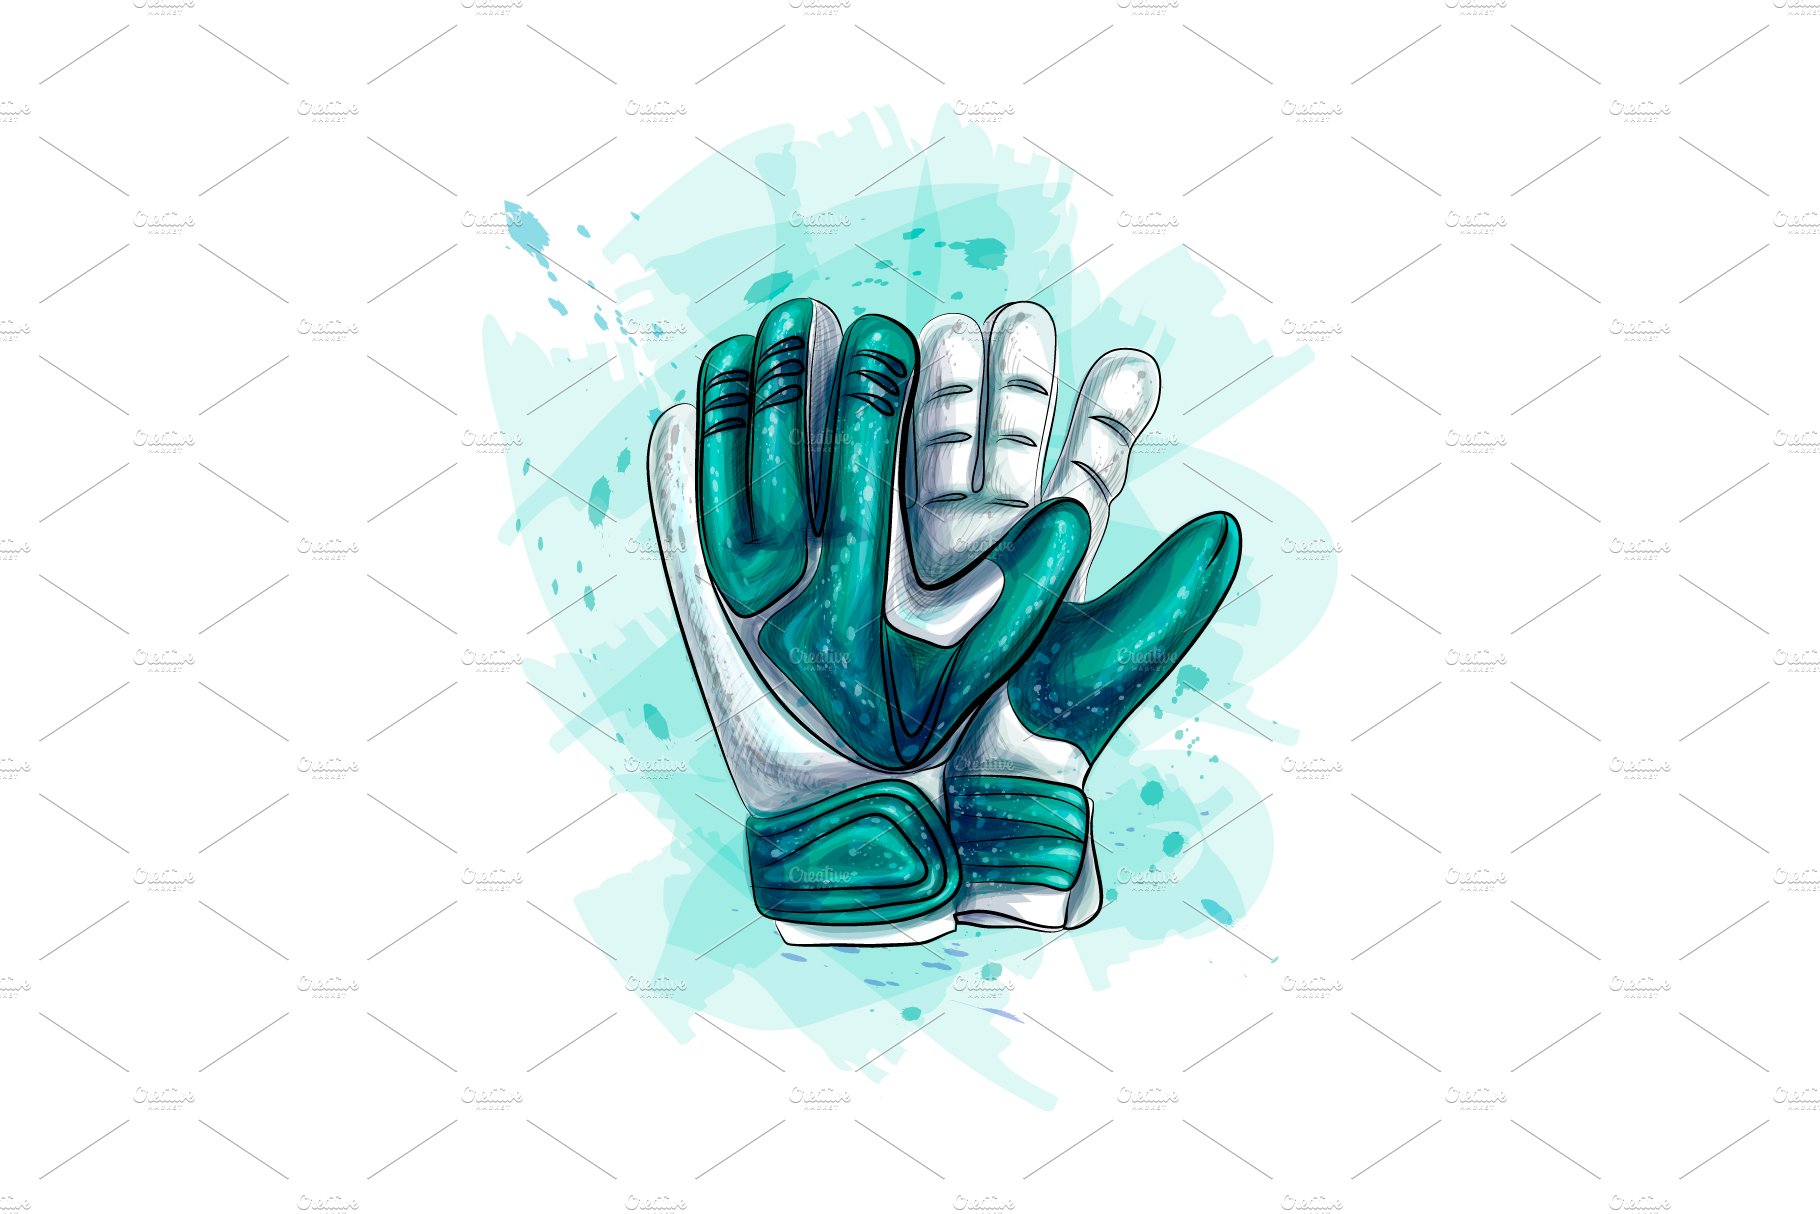 Goalkeeper gloves cover image.